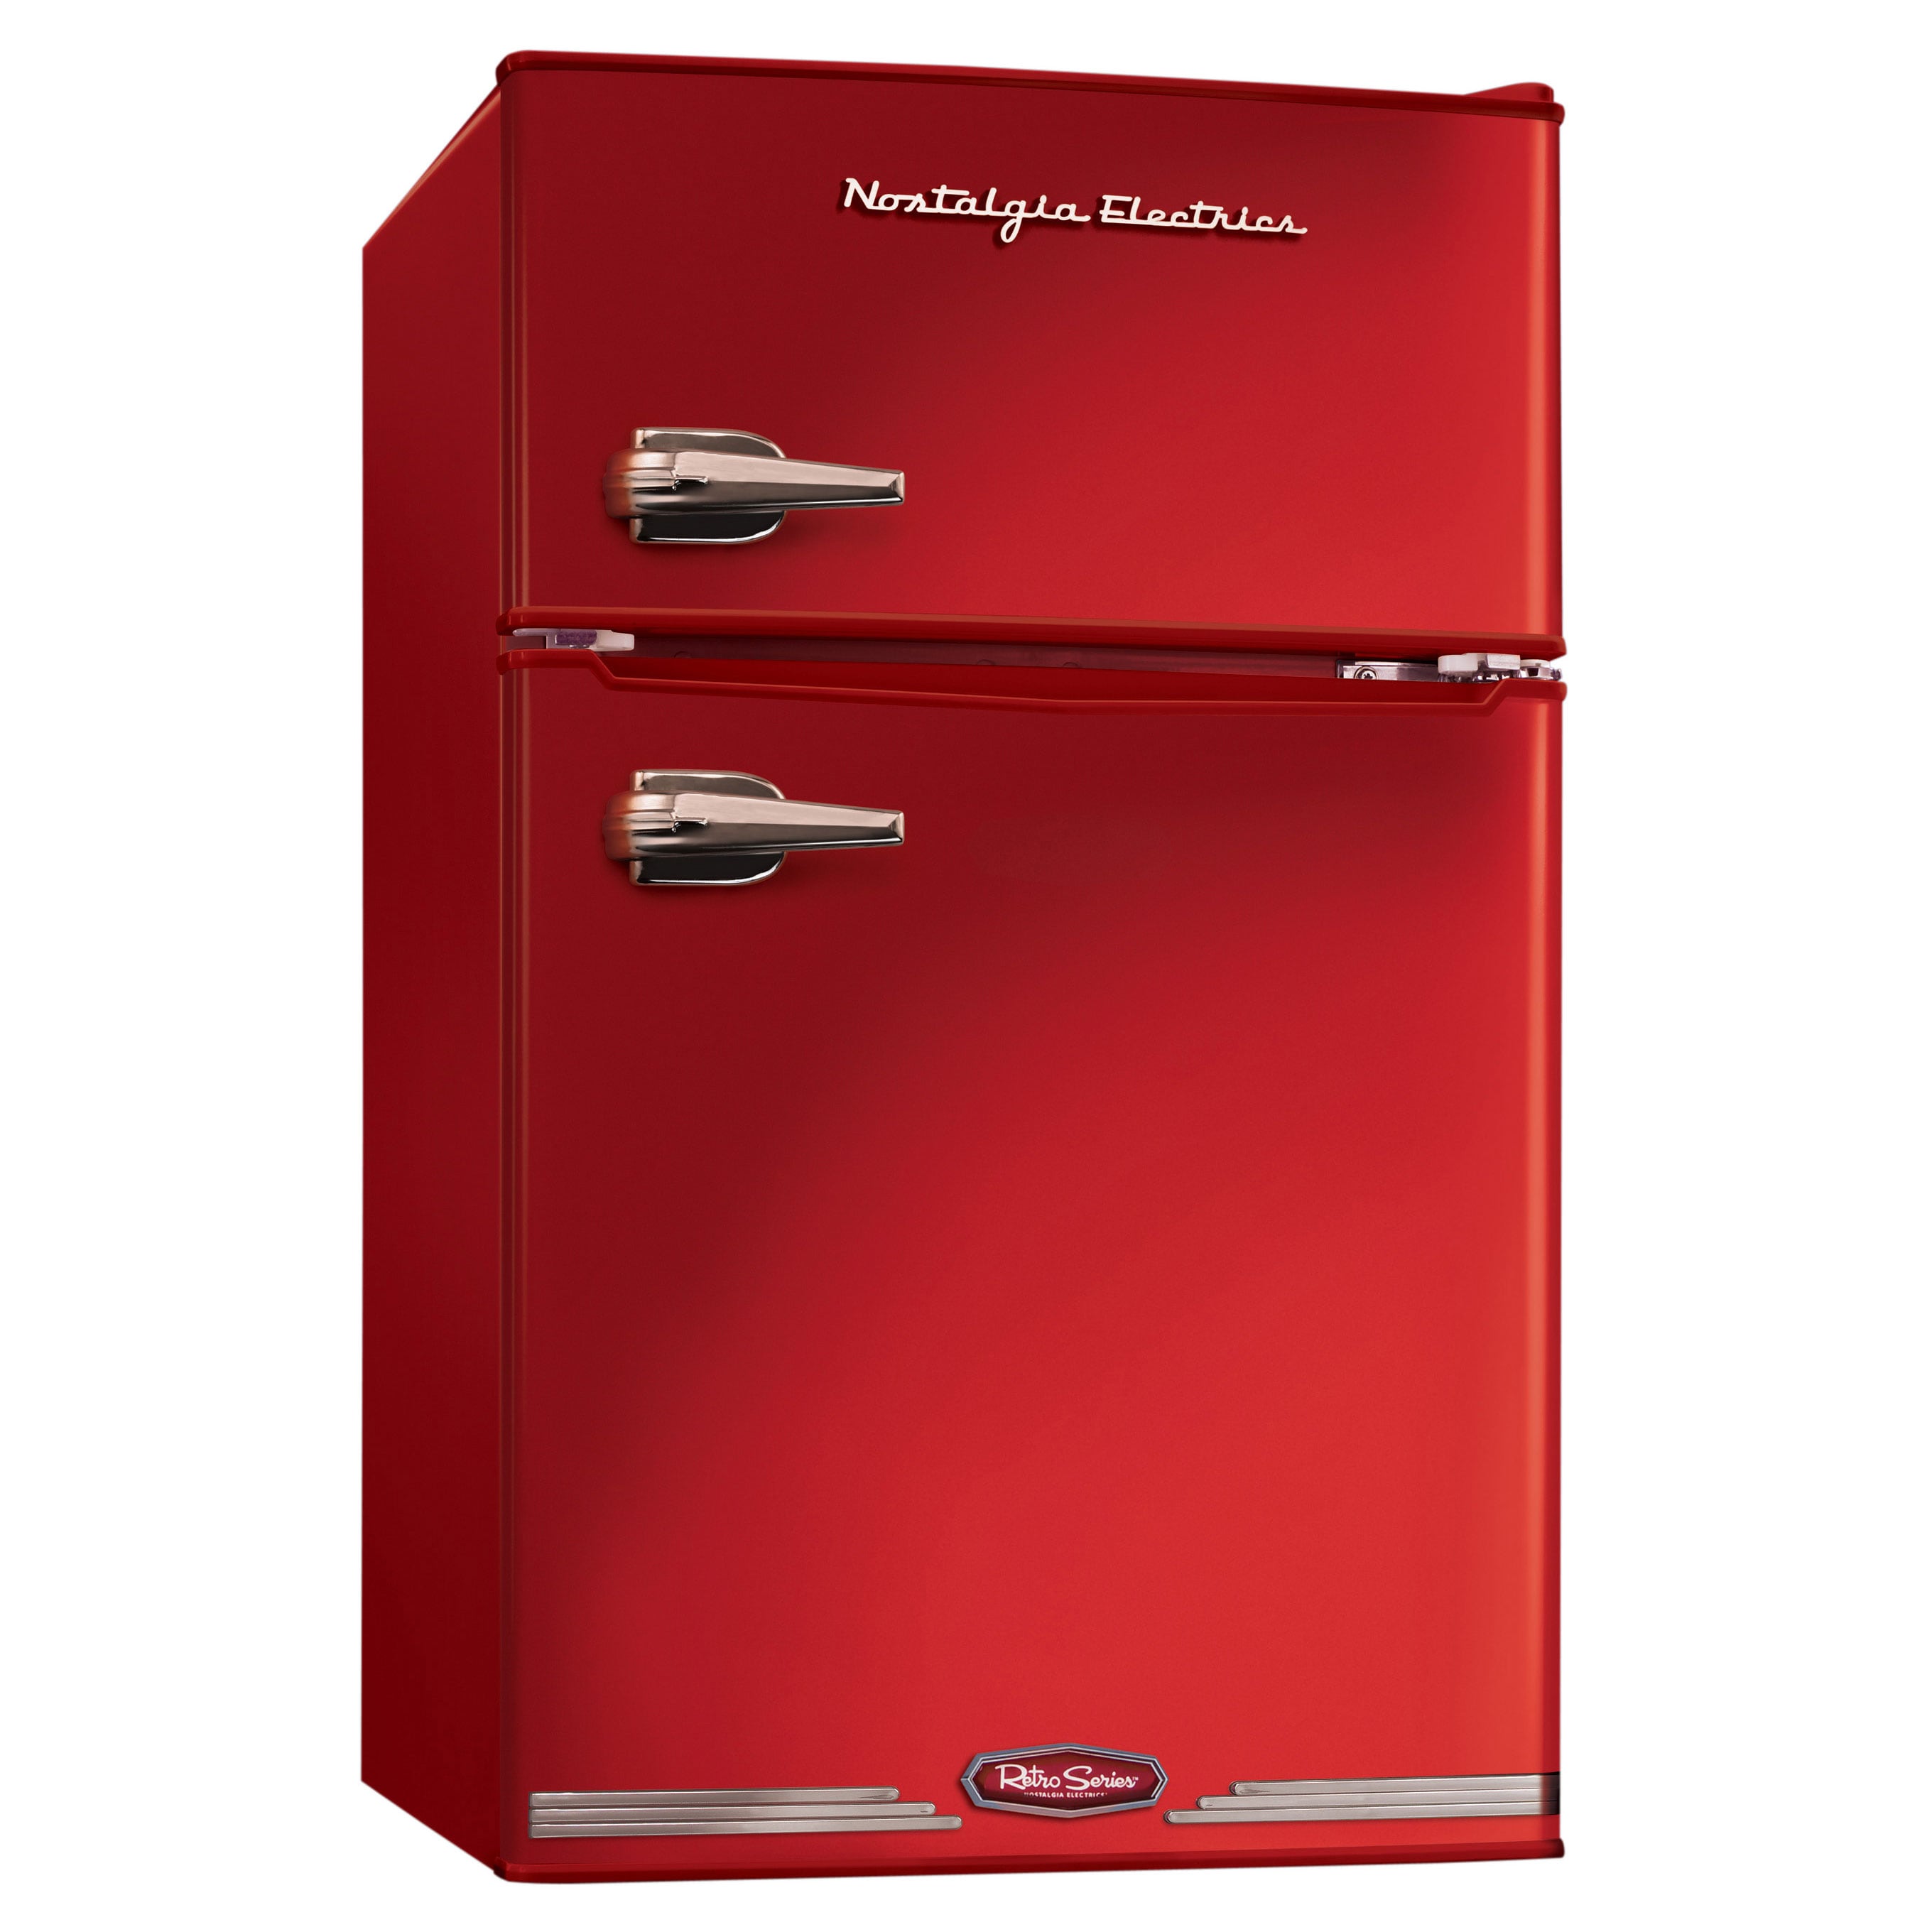 Nostalgia Electrics Red Retro Series 3.0Cubic Foot Compact Refrigerator Freezer Overstock